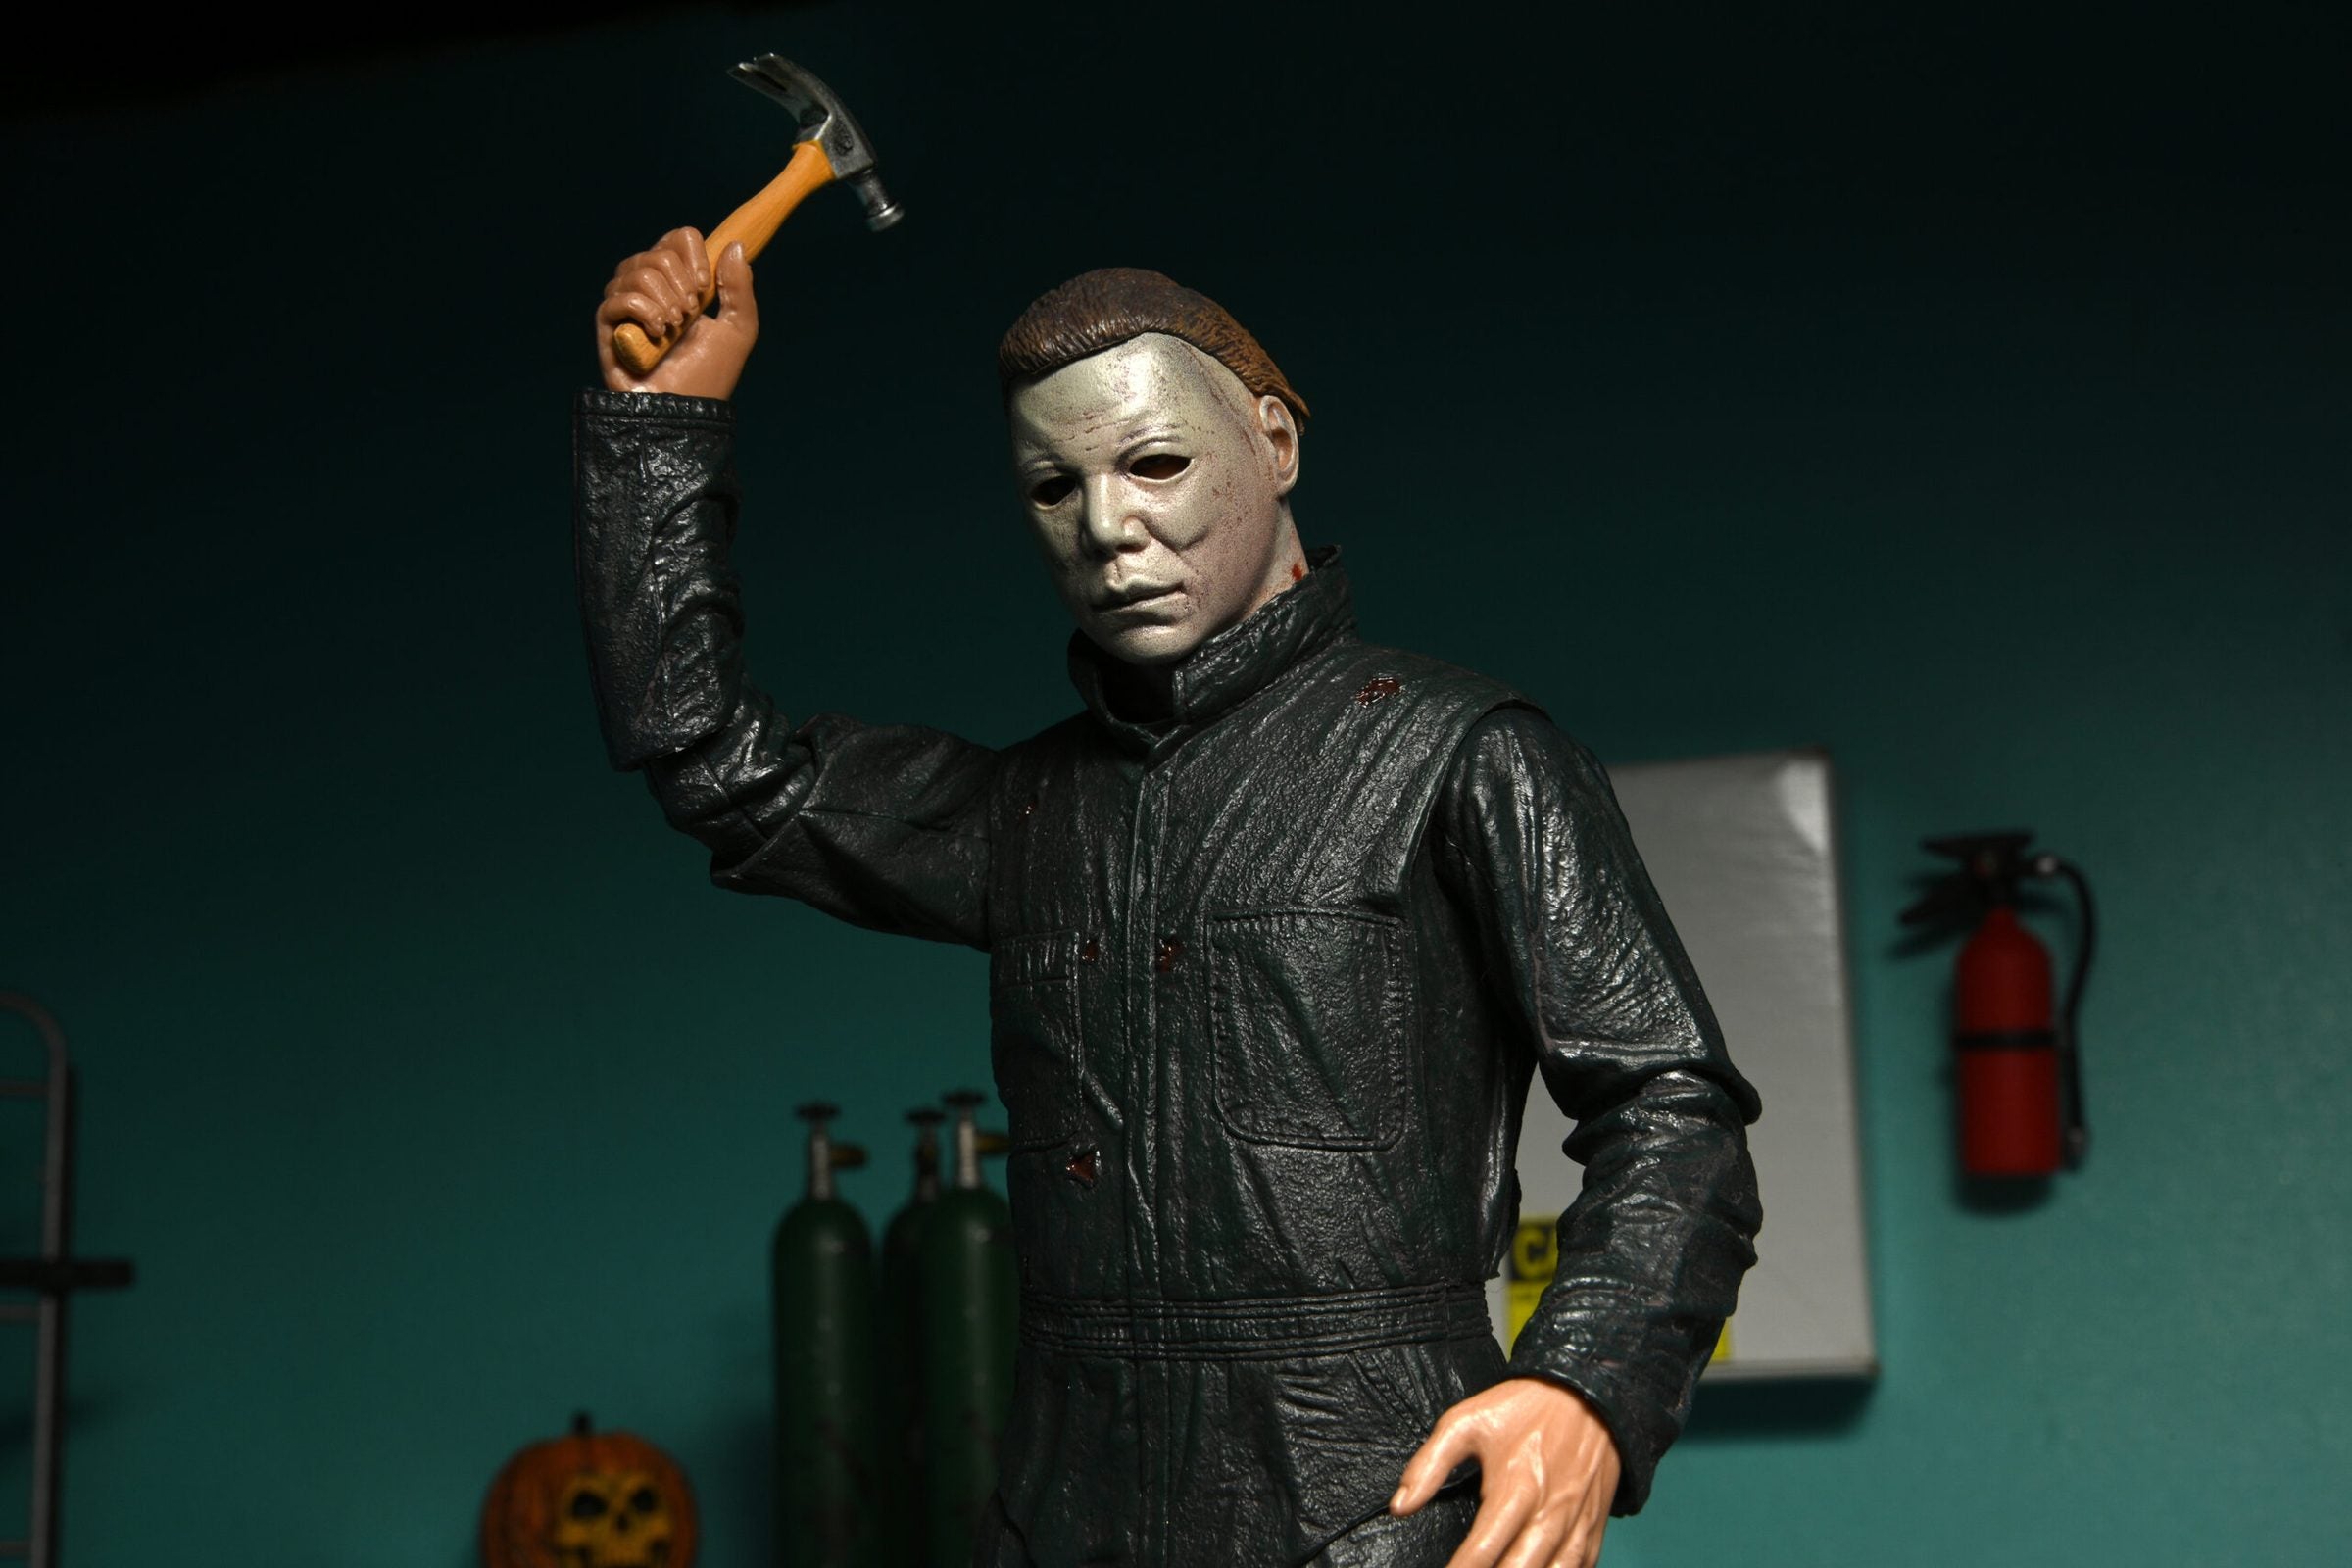 Neca Figura de Accion Ultimate: Halloween - Ultimate Michael Myers y Dr Loomis 2 pack 7 Pulgadas Preventa - Akiba